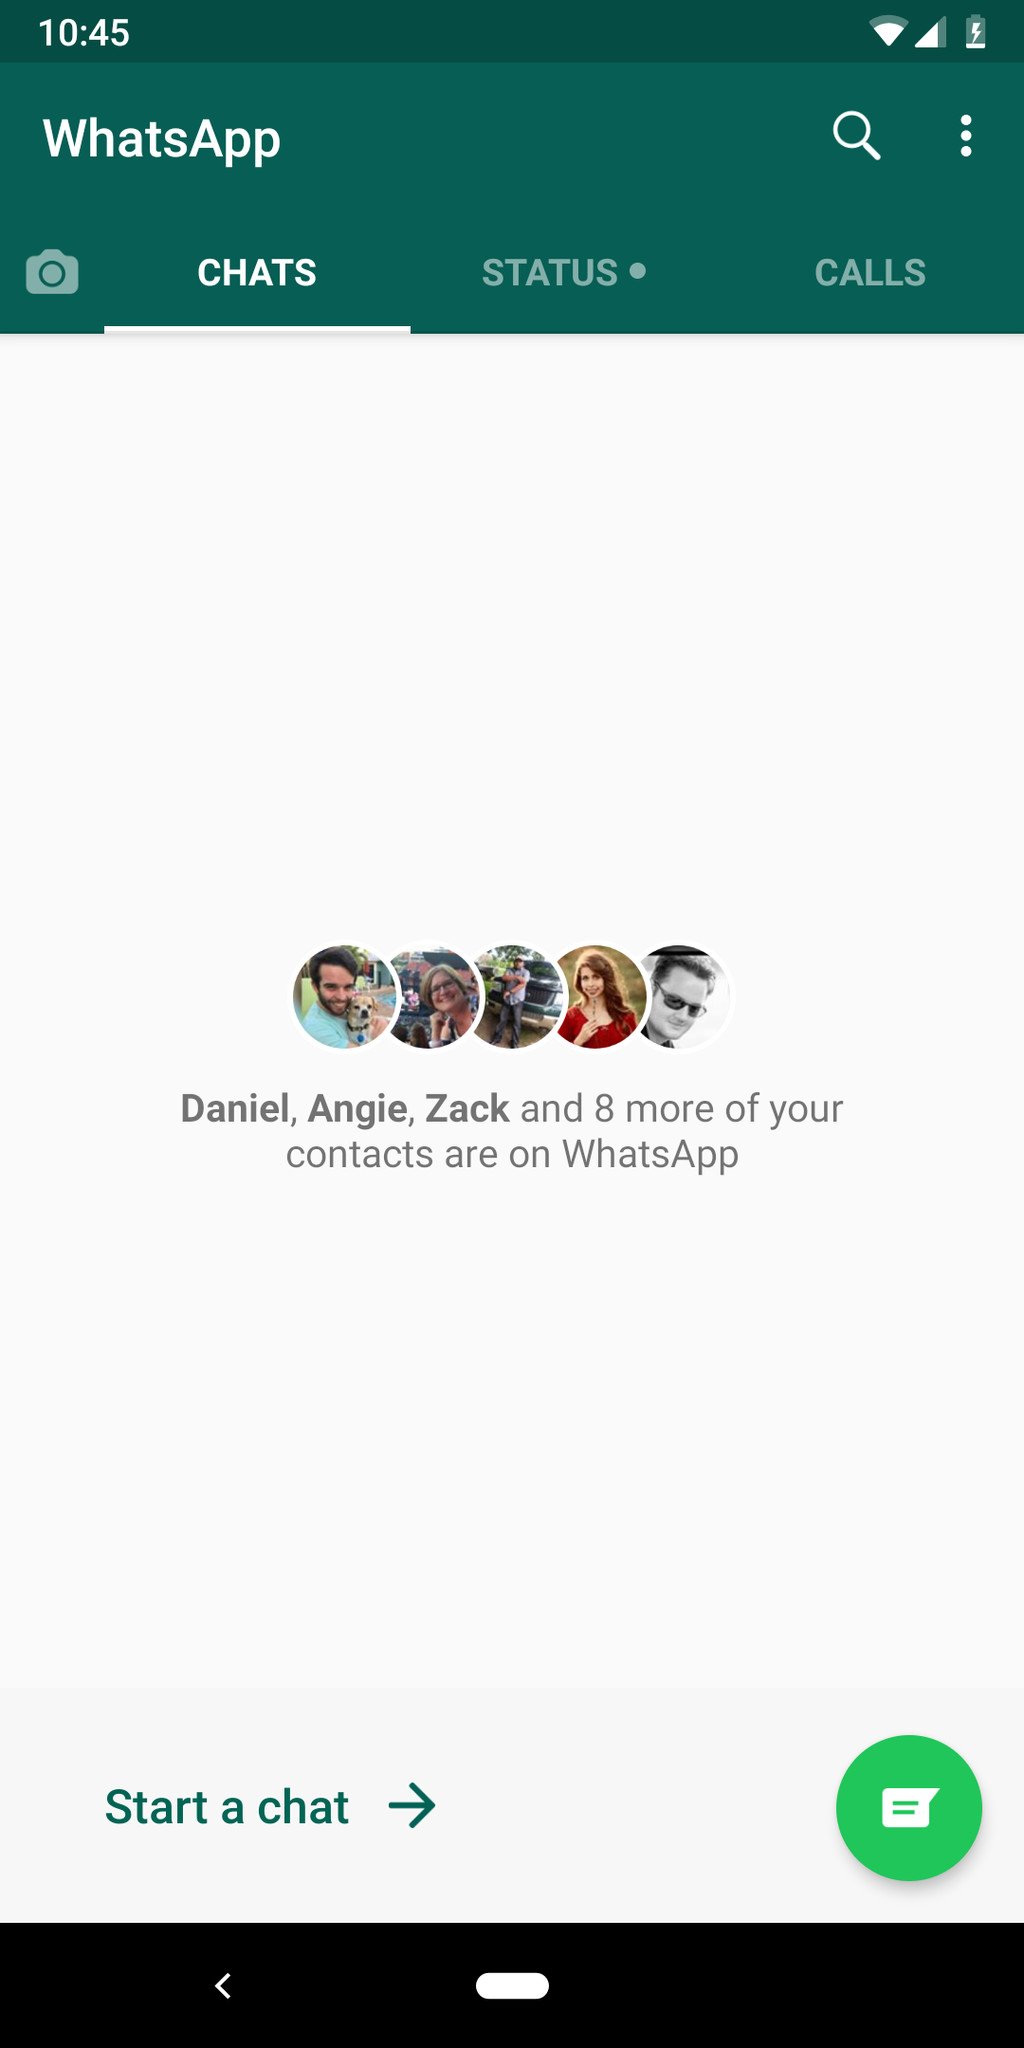 WhatsApp home screen